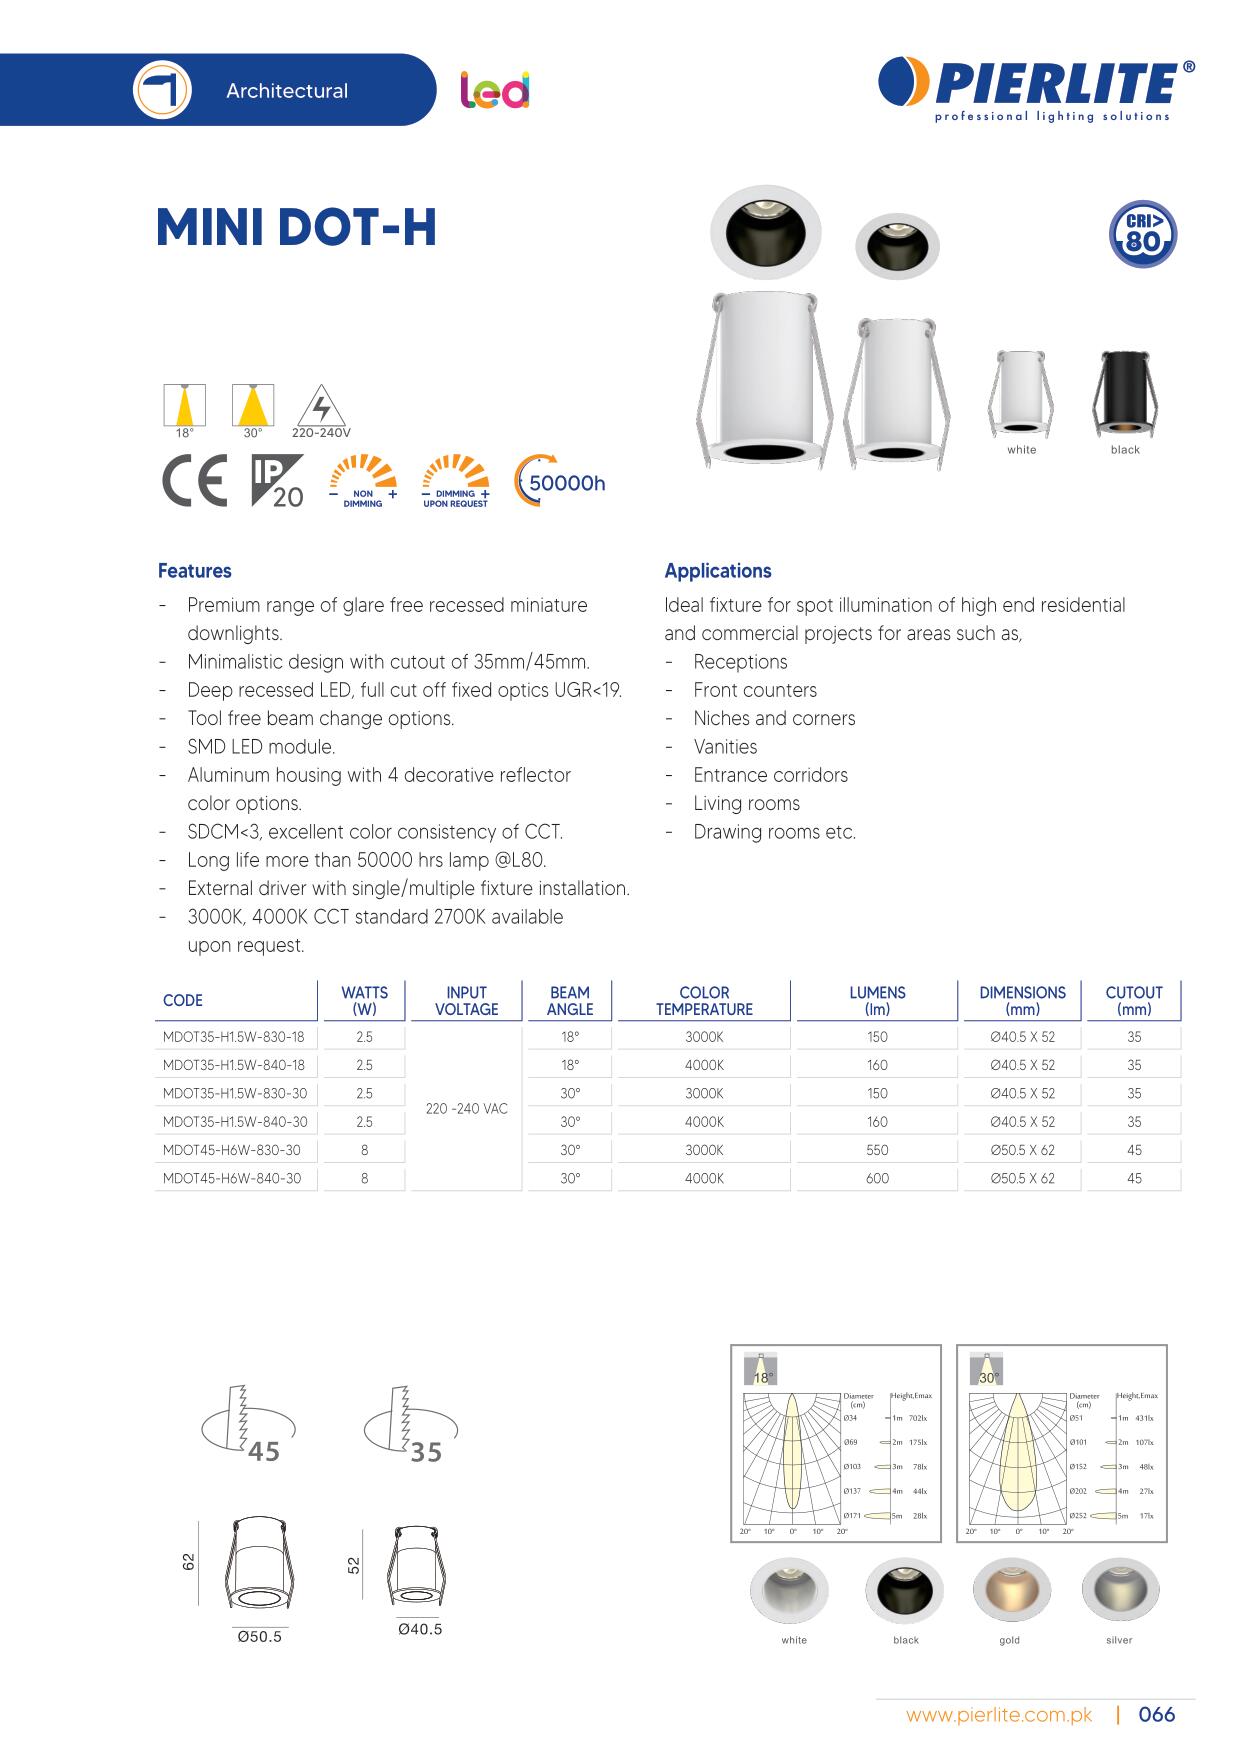 Pierlite LED Luminaire Catalog 2021-75